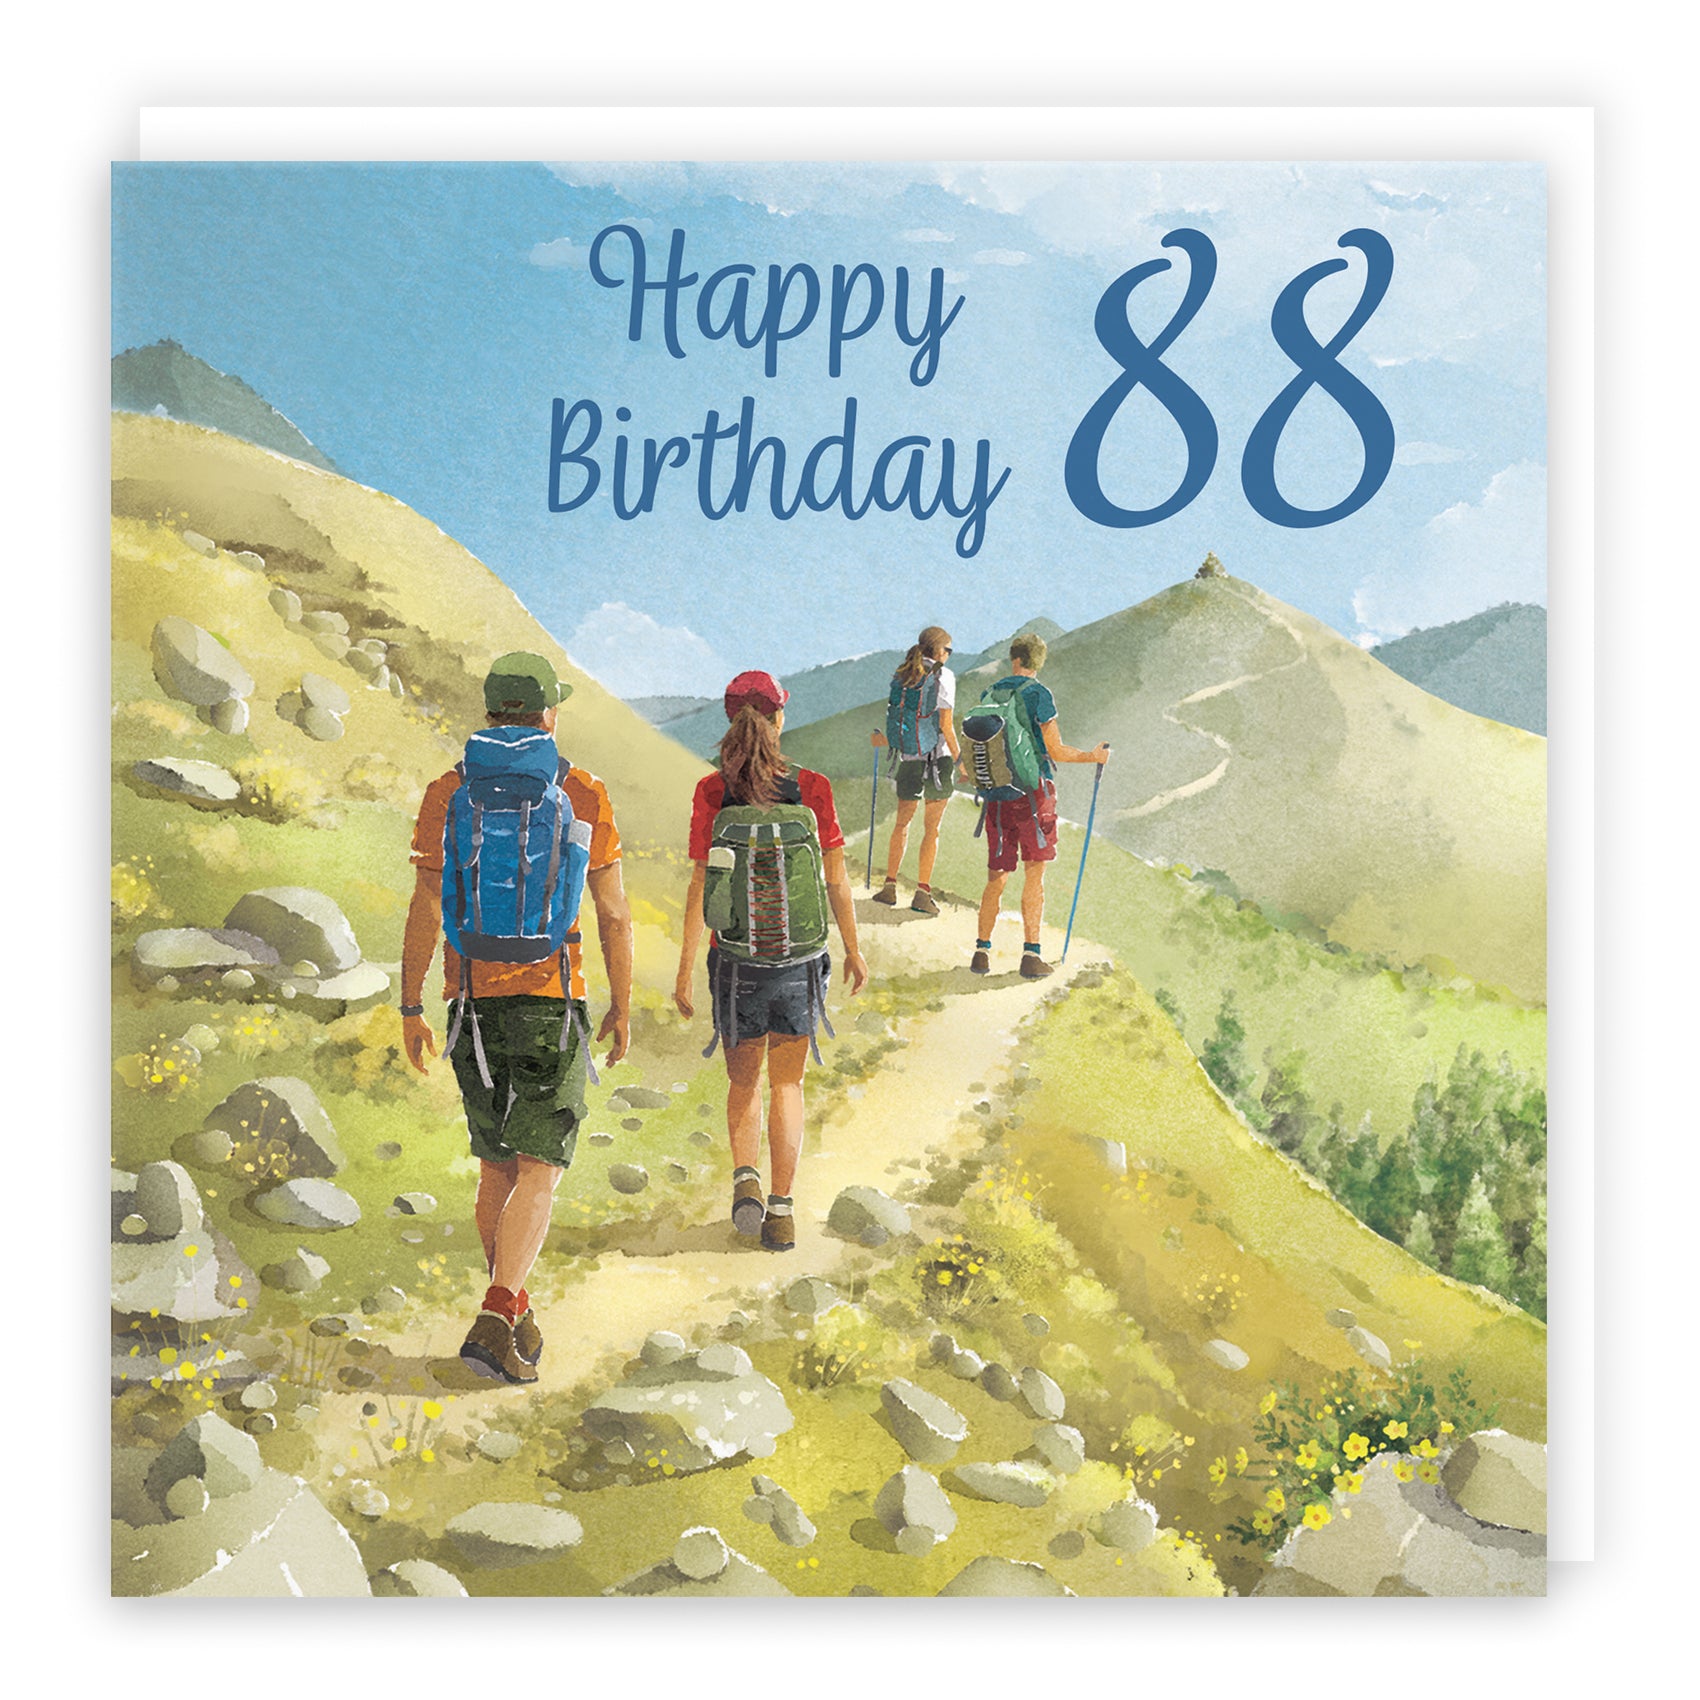 88th Birthday Cards - Age 88